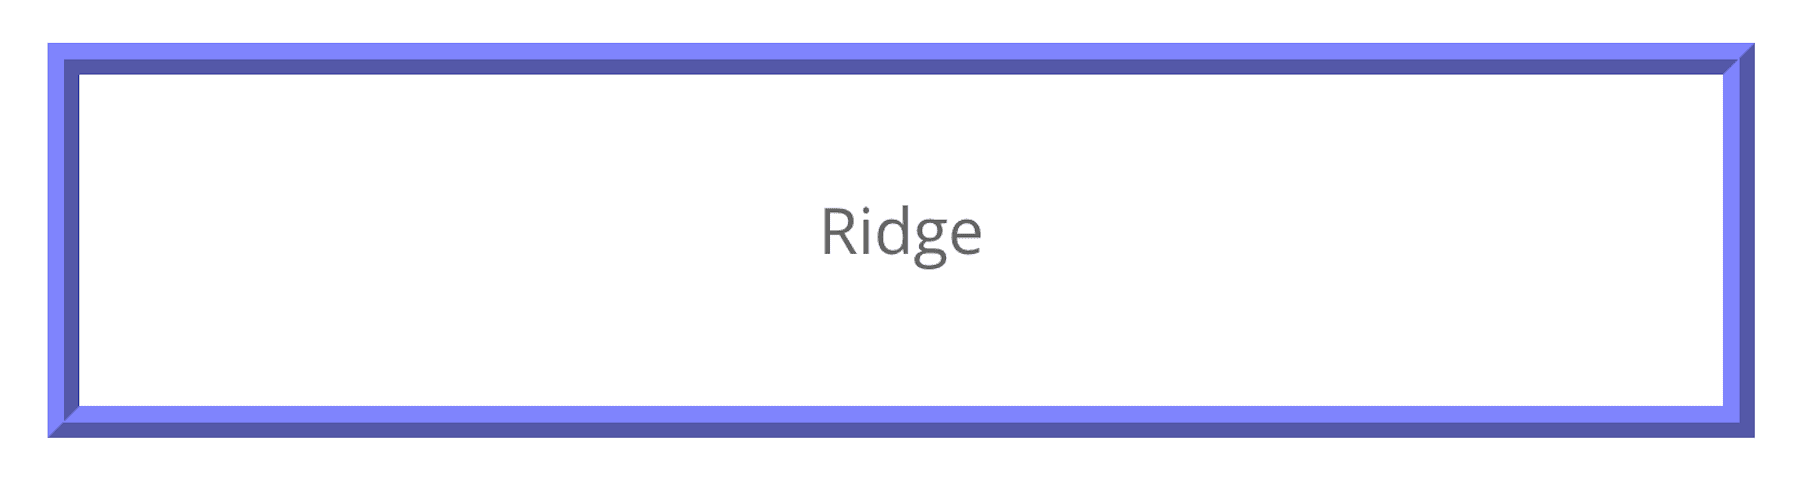 Ridge border in Divi Border Options